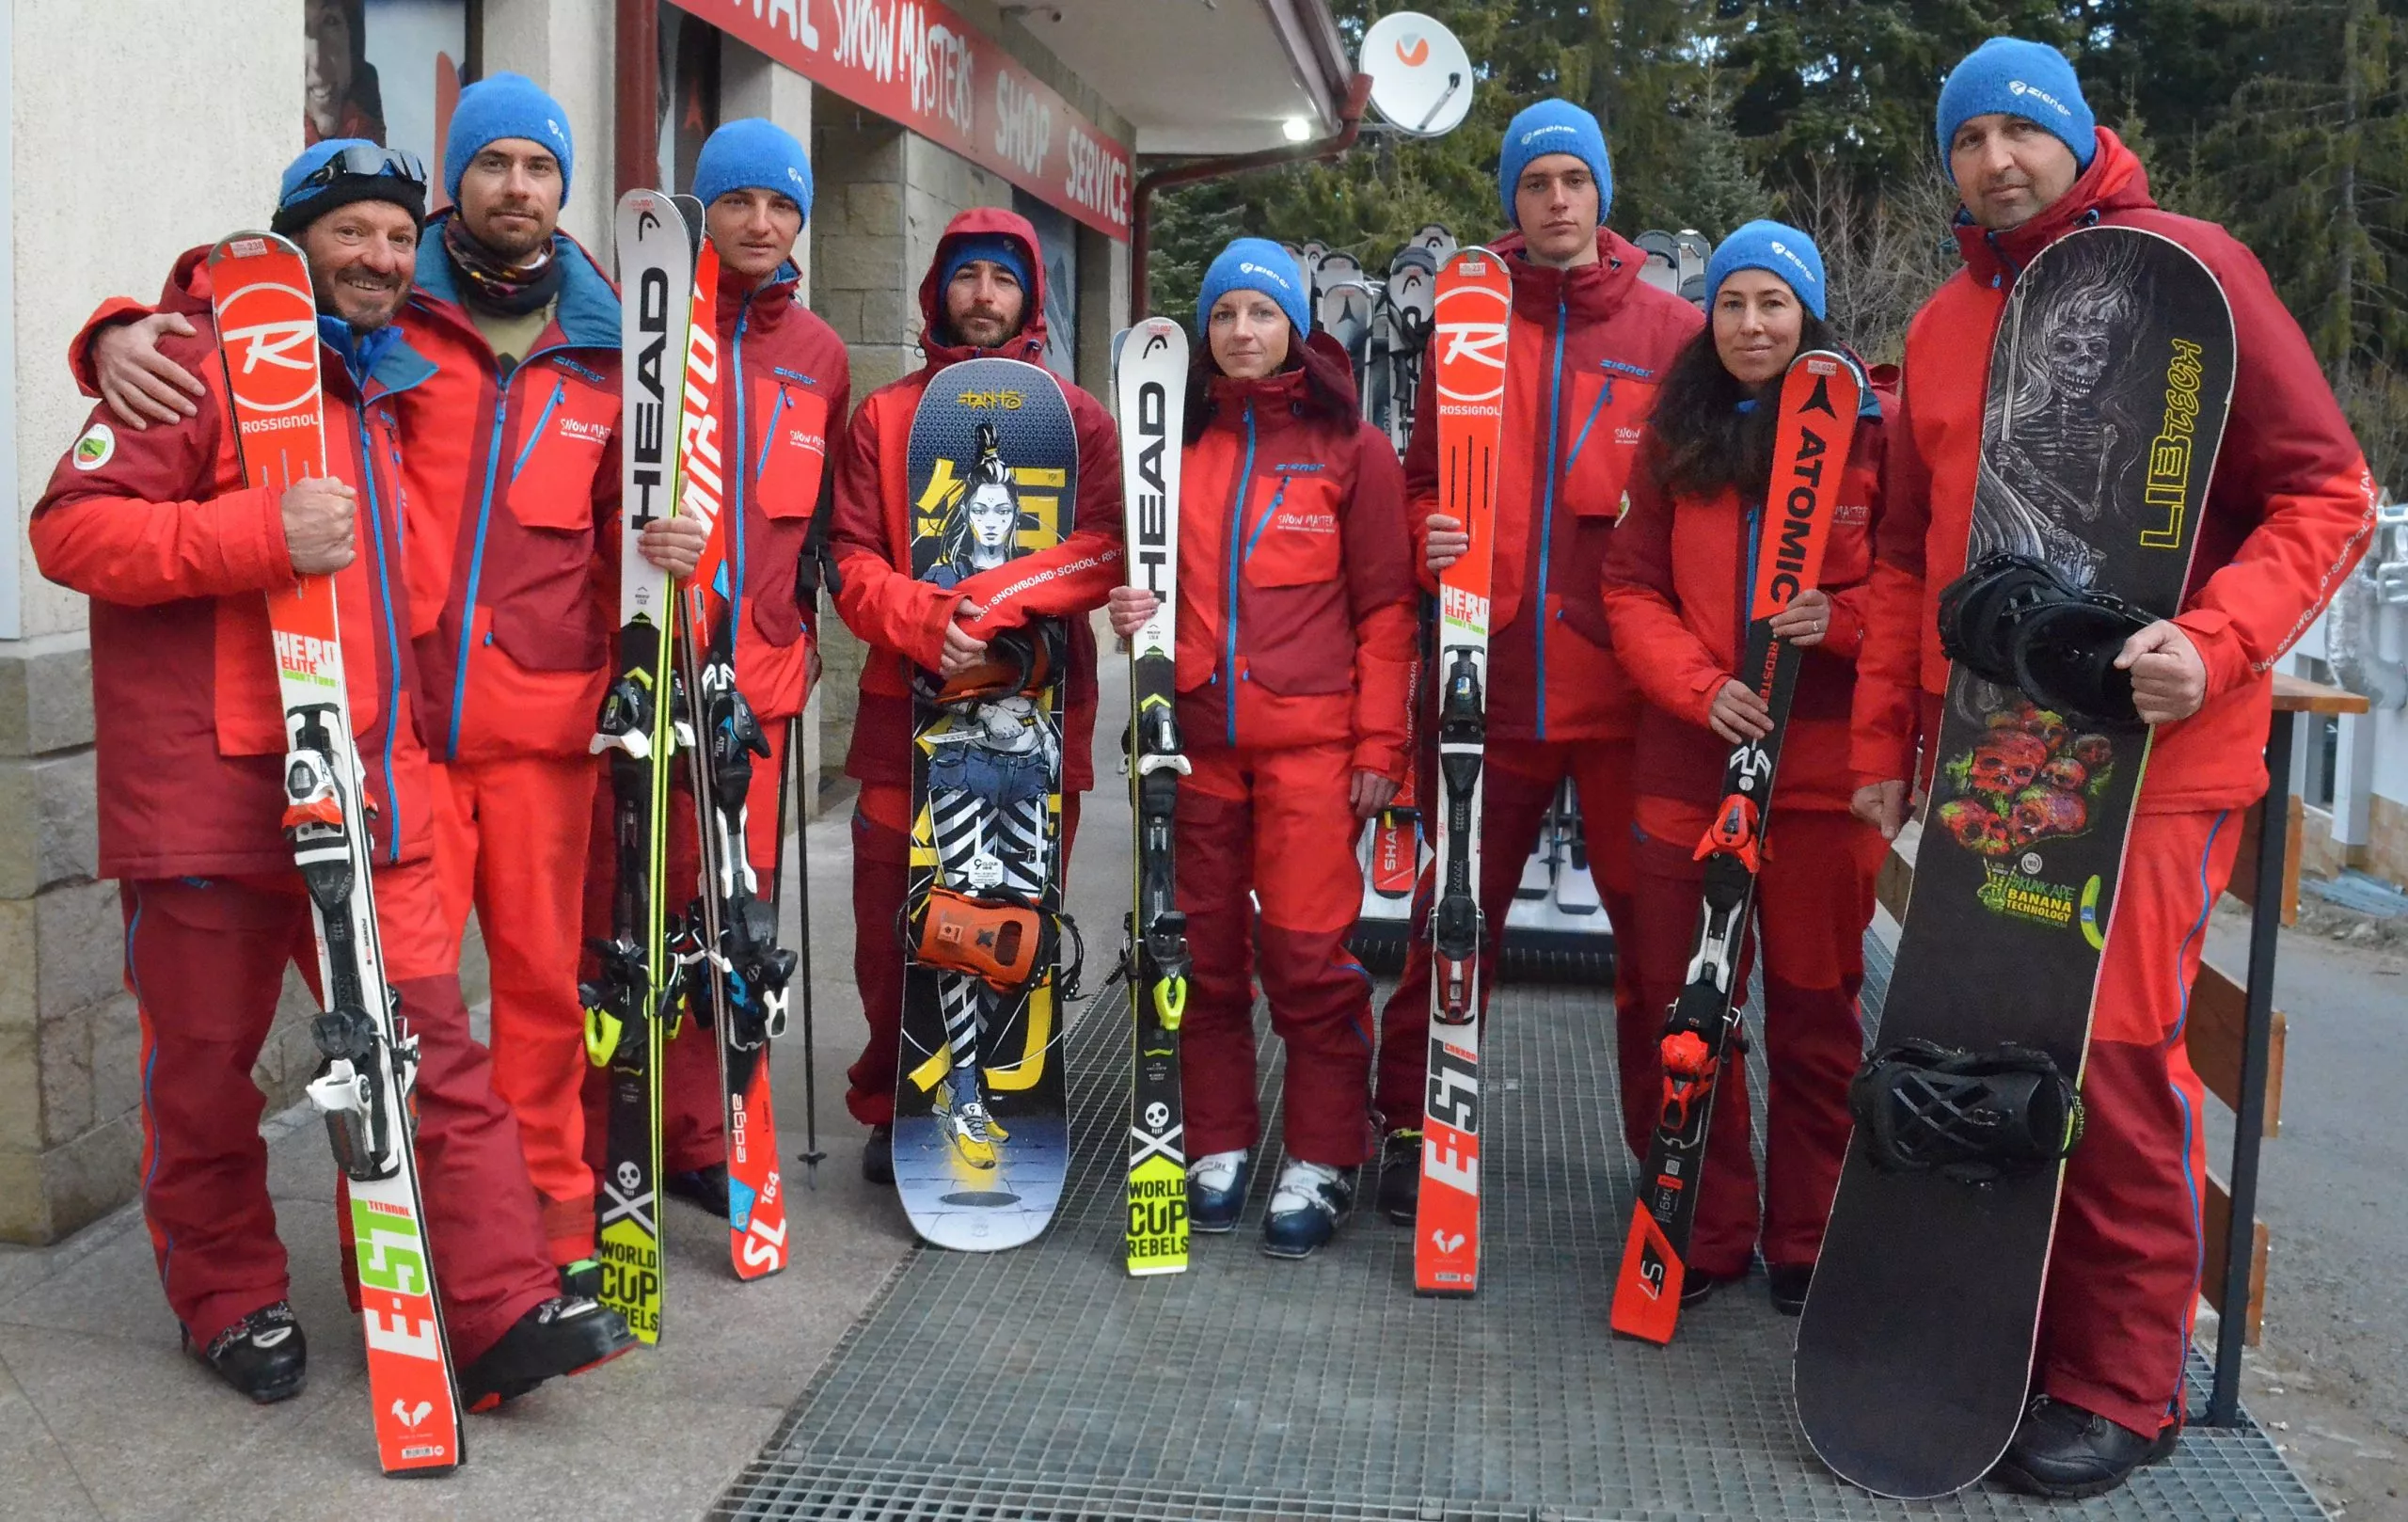 Ski School Snow Masters Borovets in Bulgaria, Europe | Snowboarding,Skiing - Rated 0.7